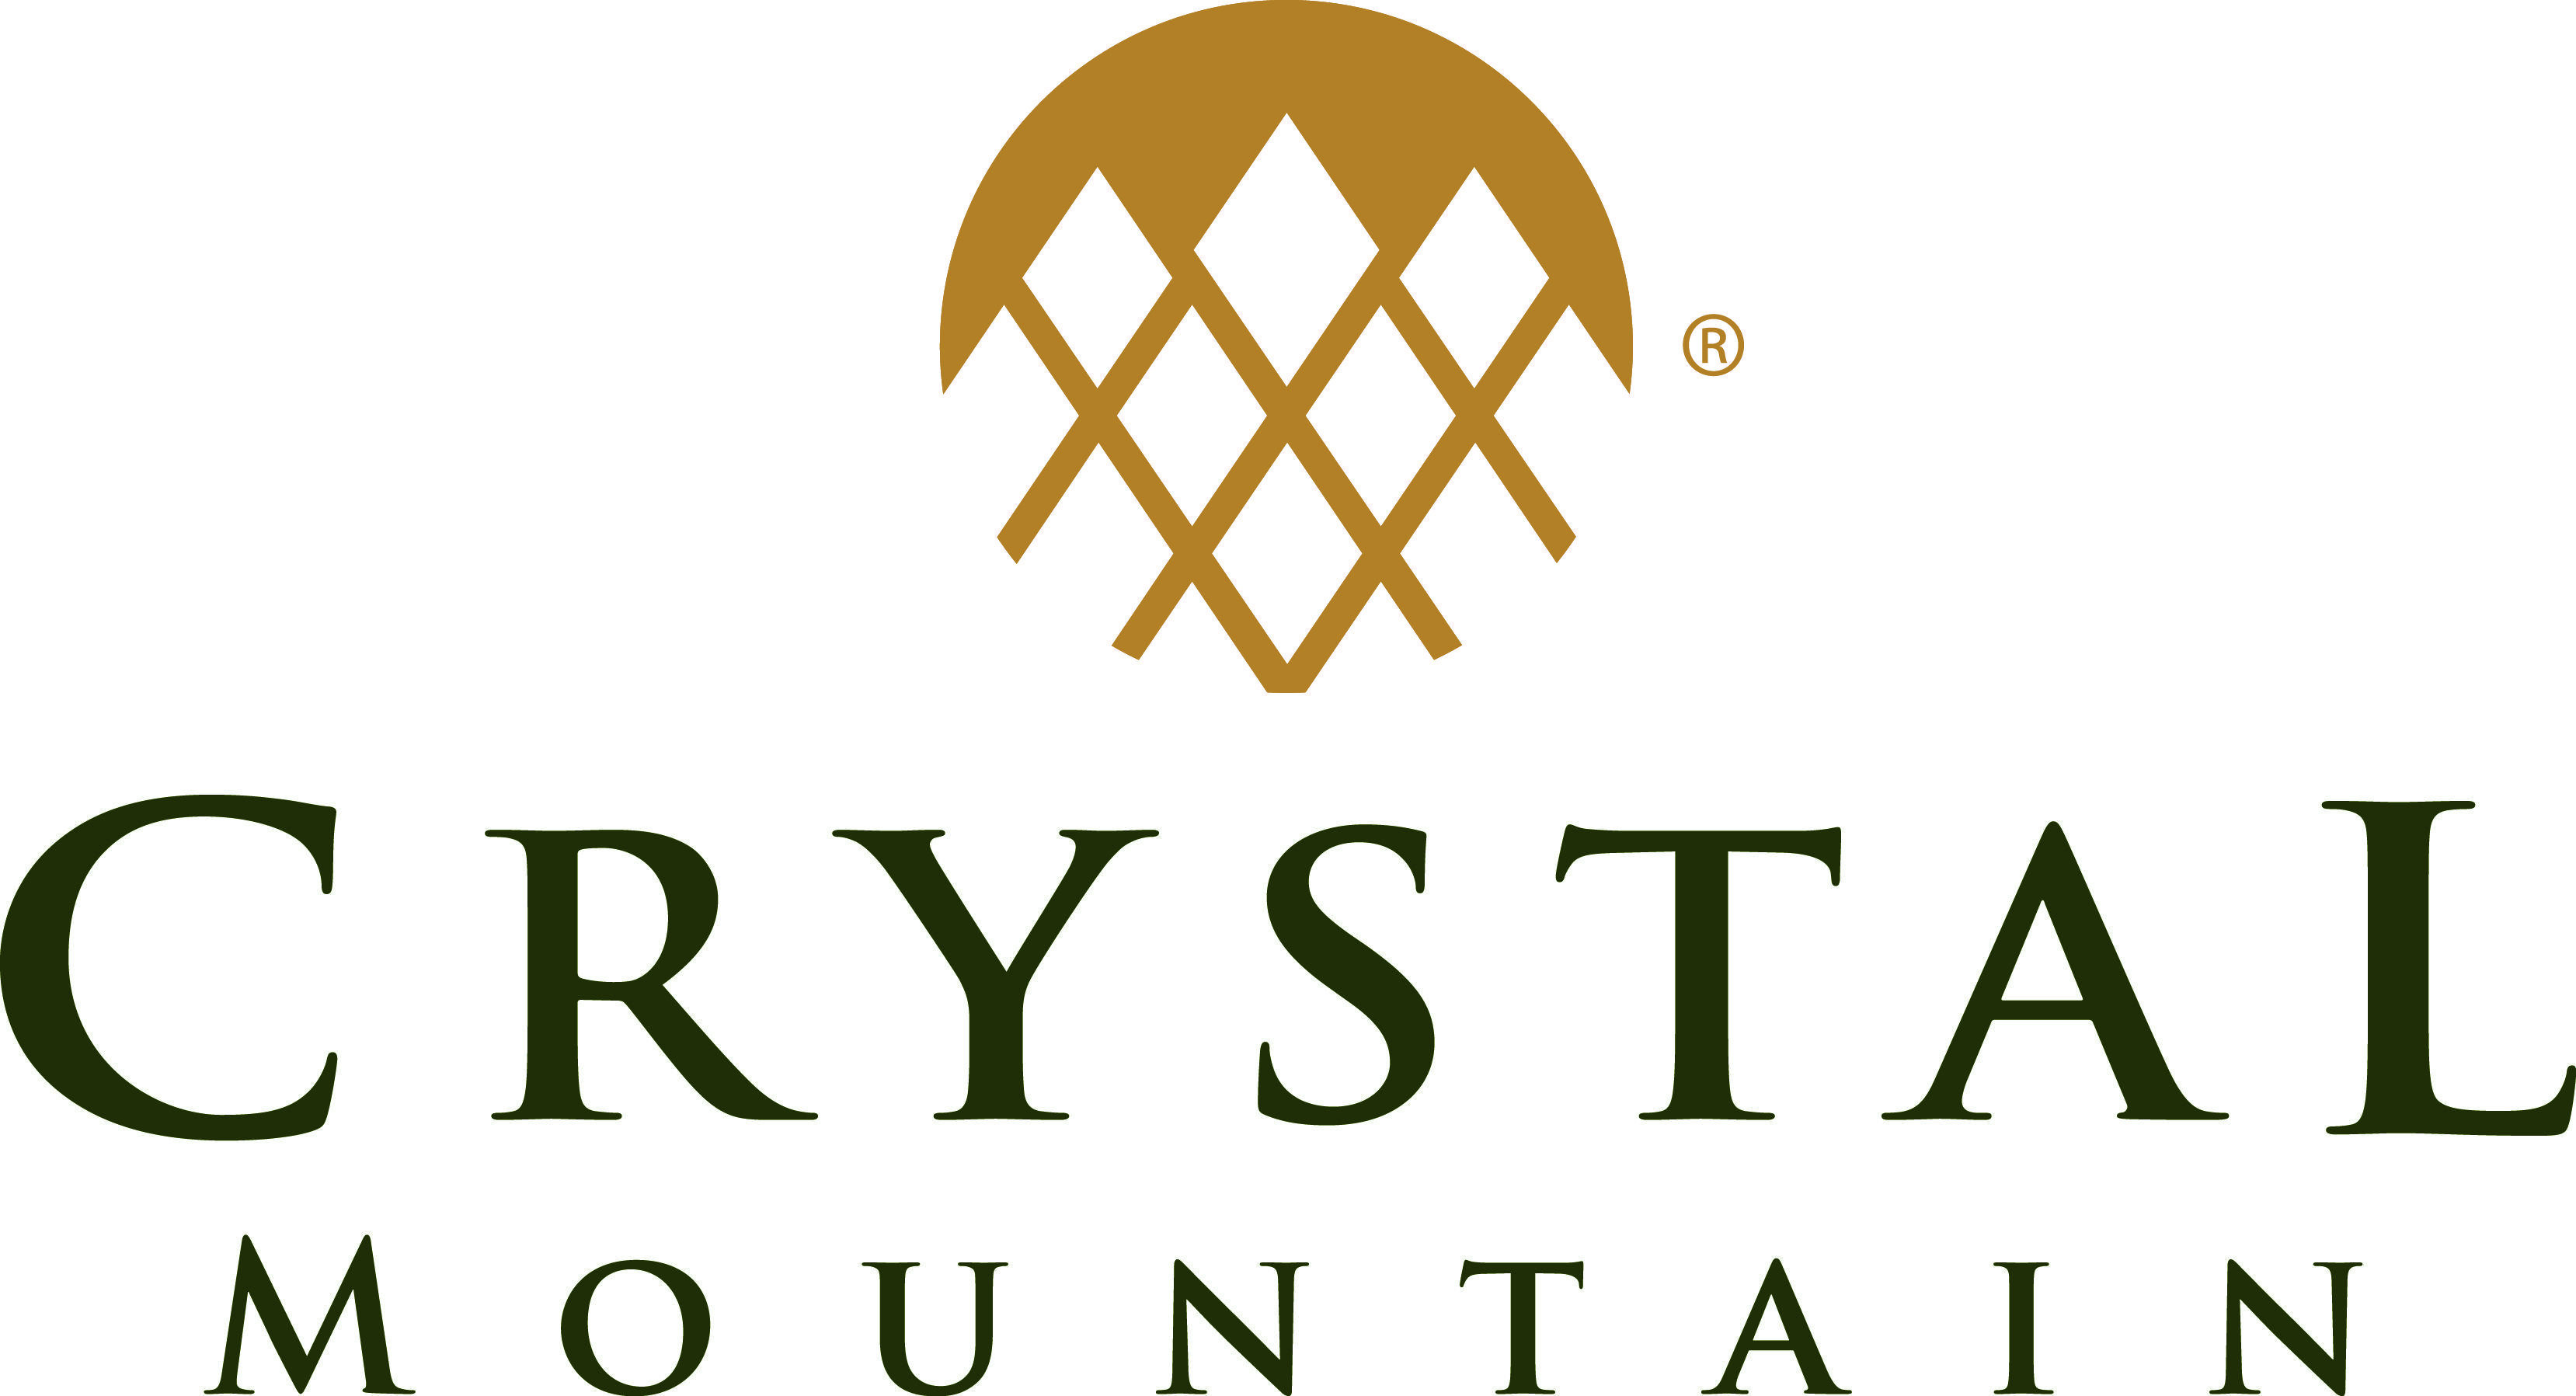 Crystal Logo - Images and Logos | Crystal Mountain Michigan